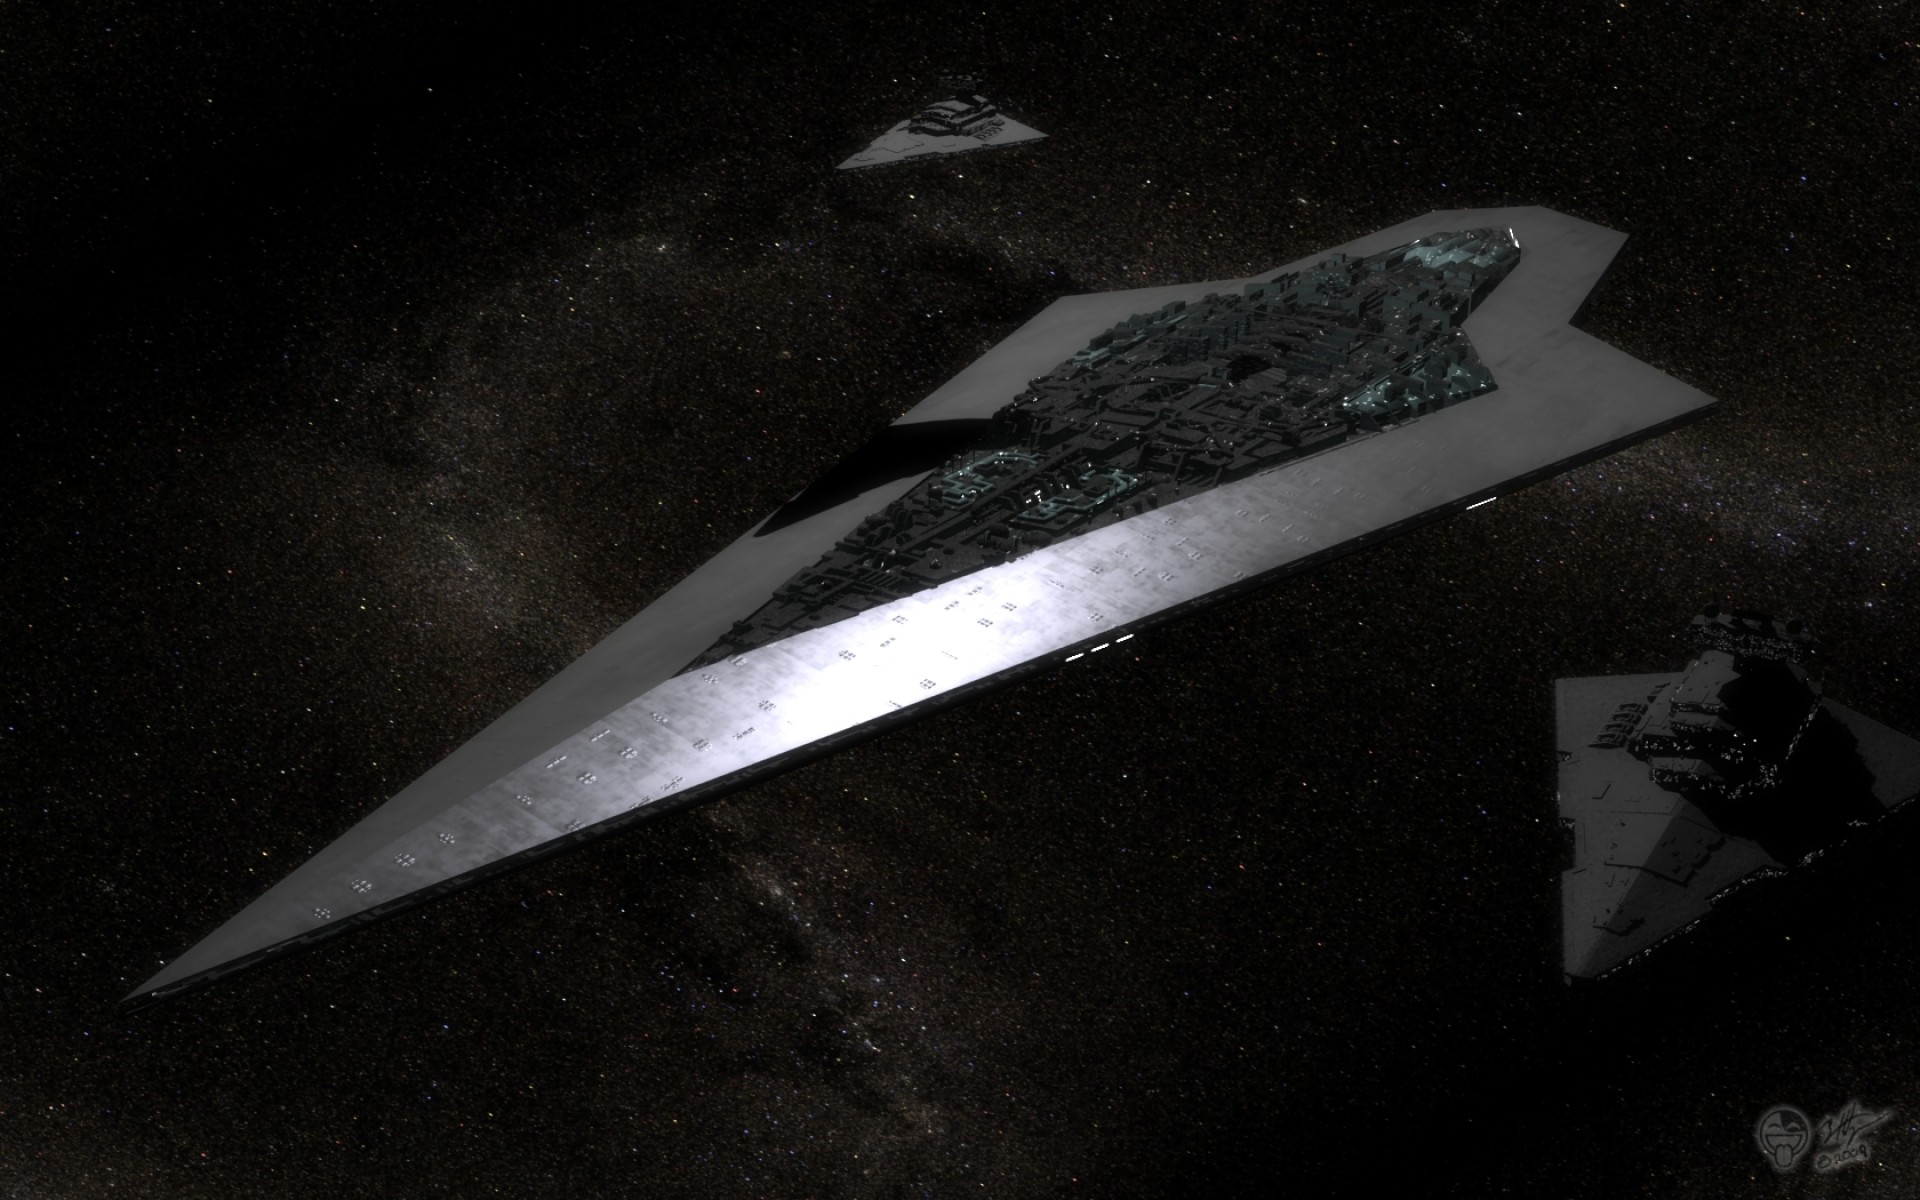 Star Wars Star Destroyer Super Star Destroyer Imperial Forces Spaceship Digital Art Render Space Sci 1920x1200